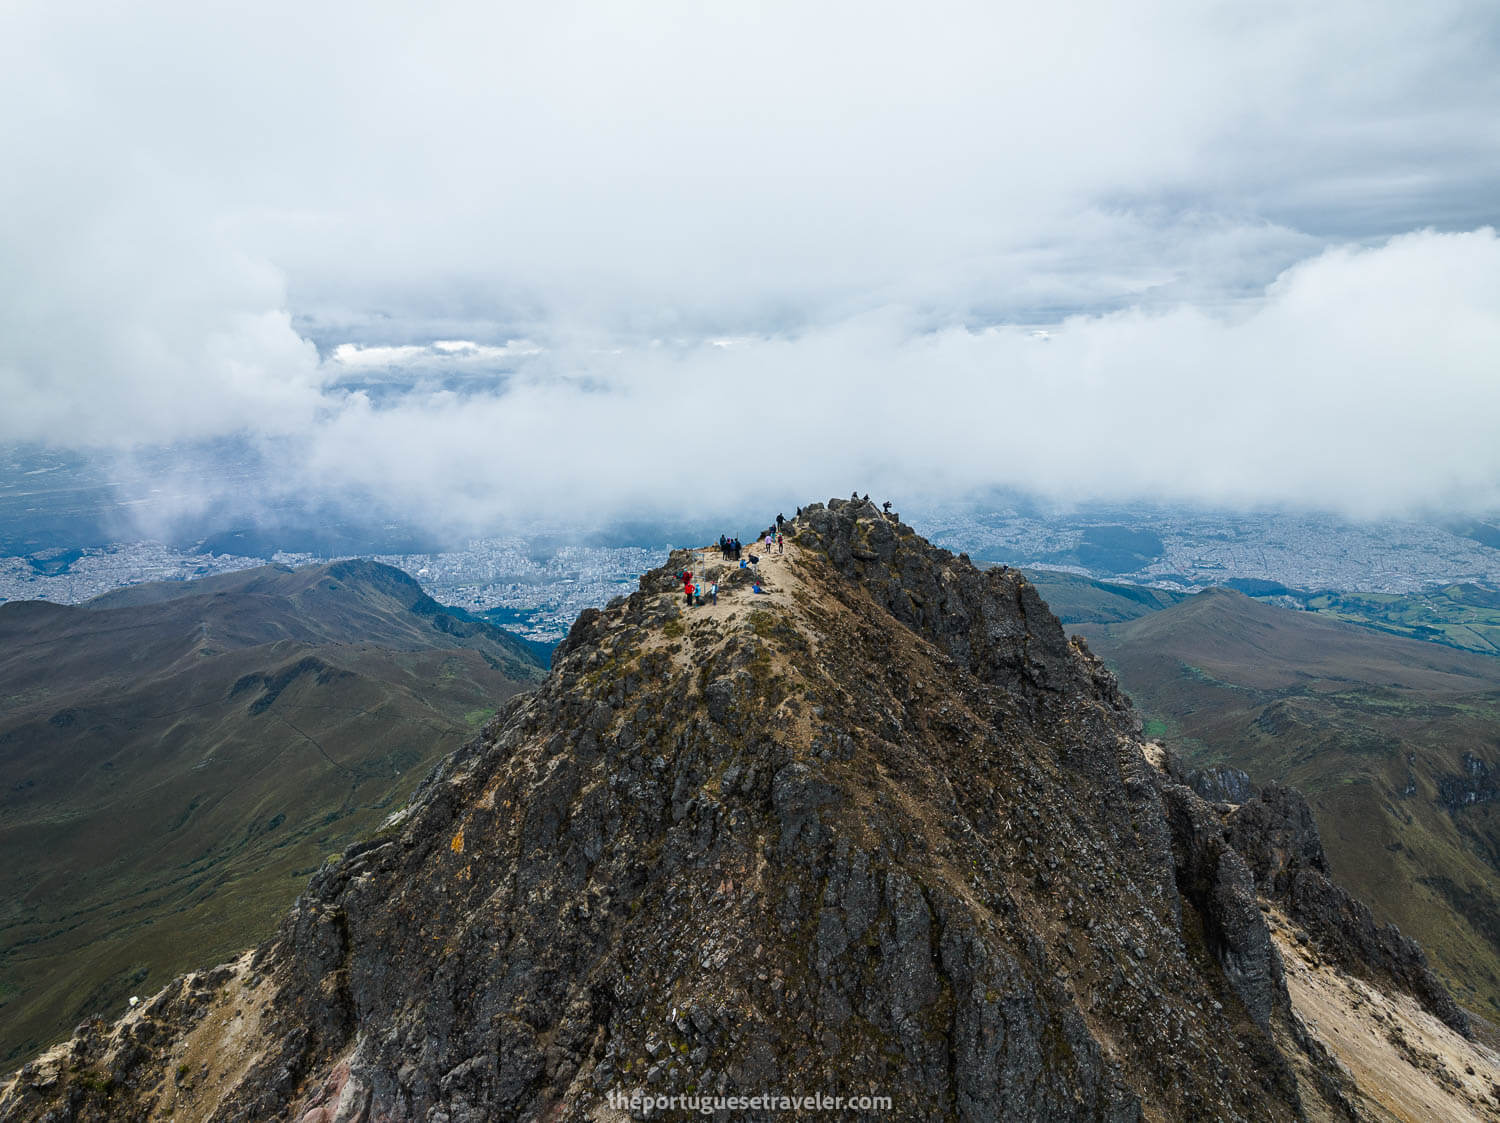 The summit of Rucu Pichincha Volcano. Credit: Miguel Almeida